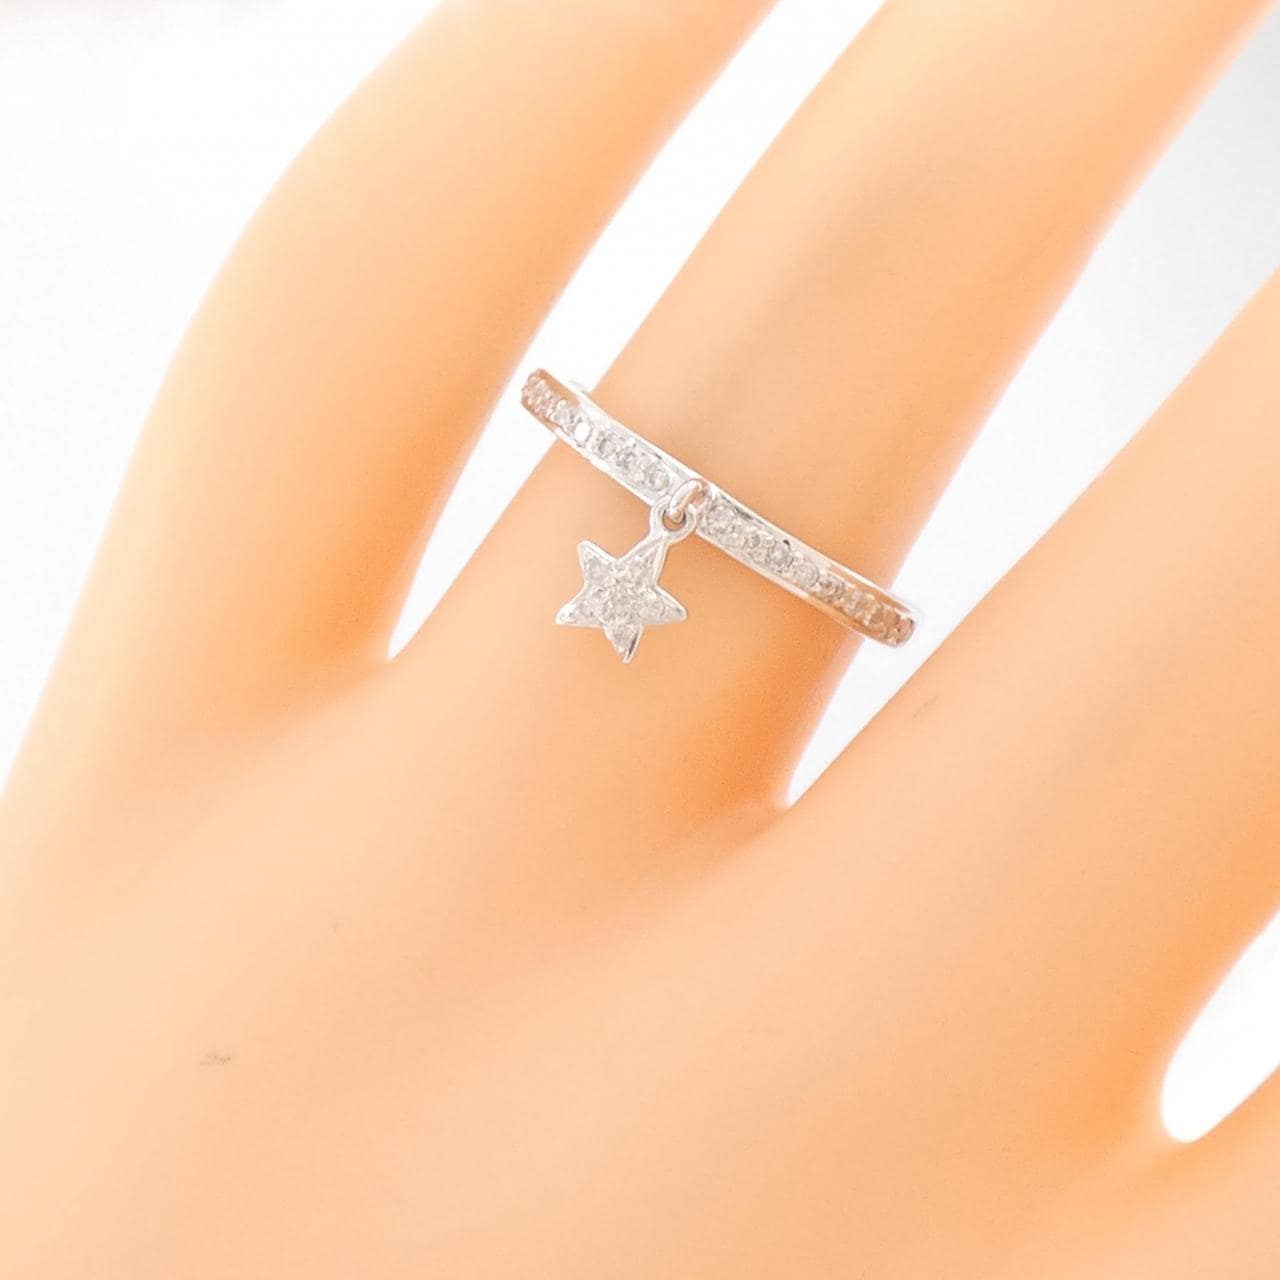 K18WG Star Diamond Ring 0.15CT